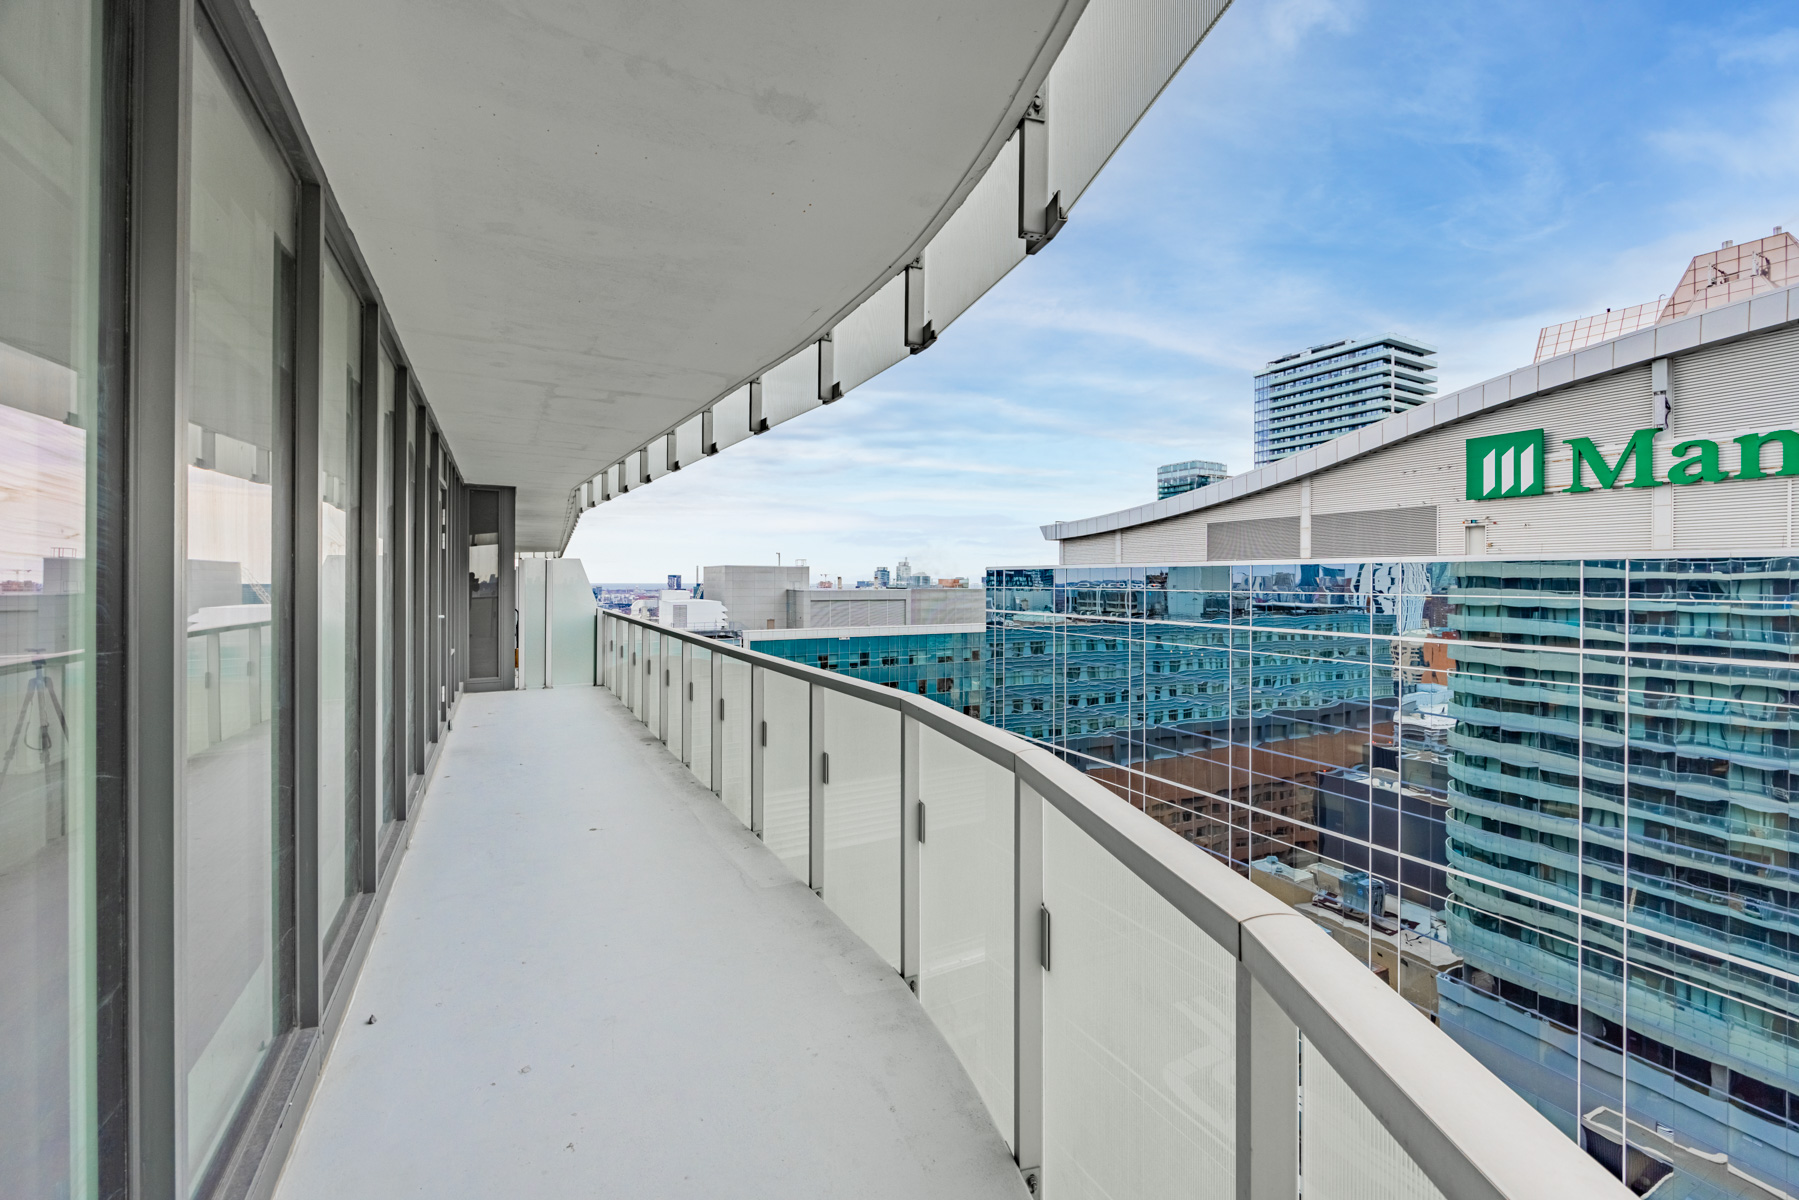 Toronto's Manulife building seen from condo balcony.